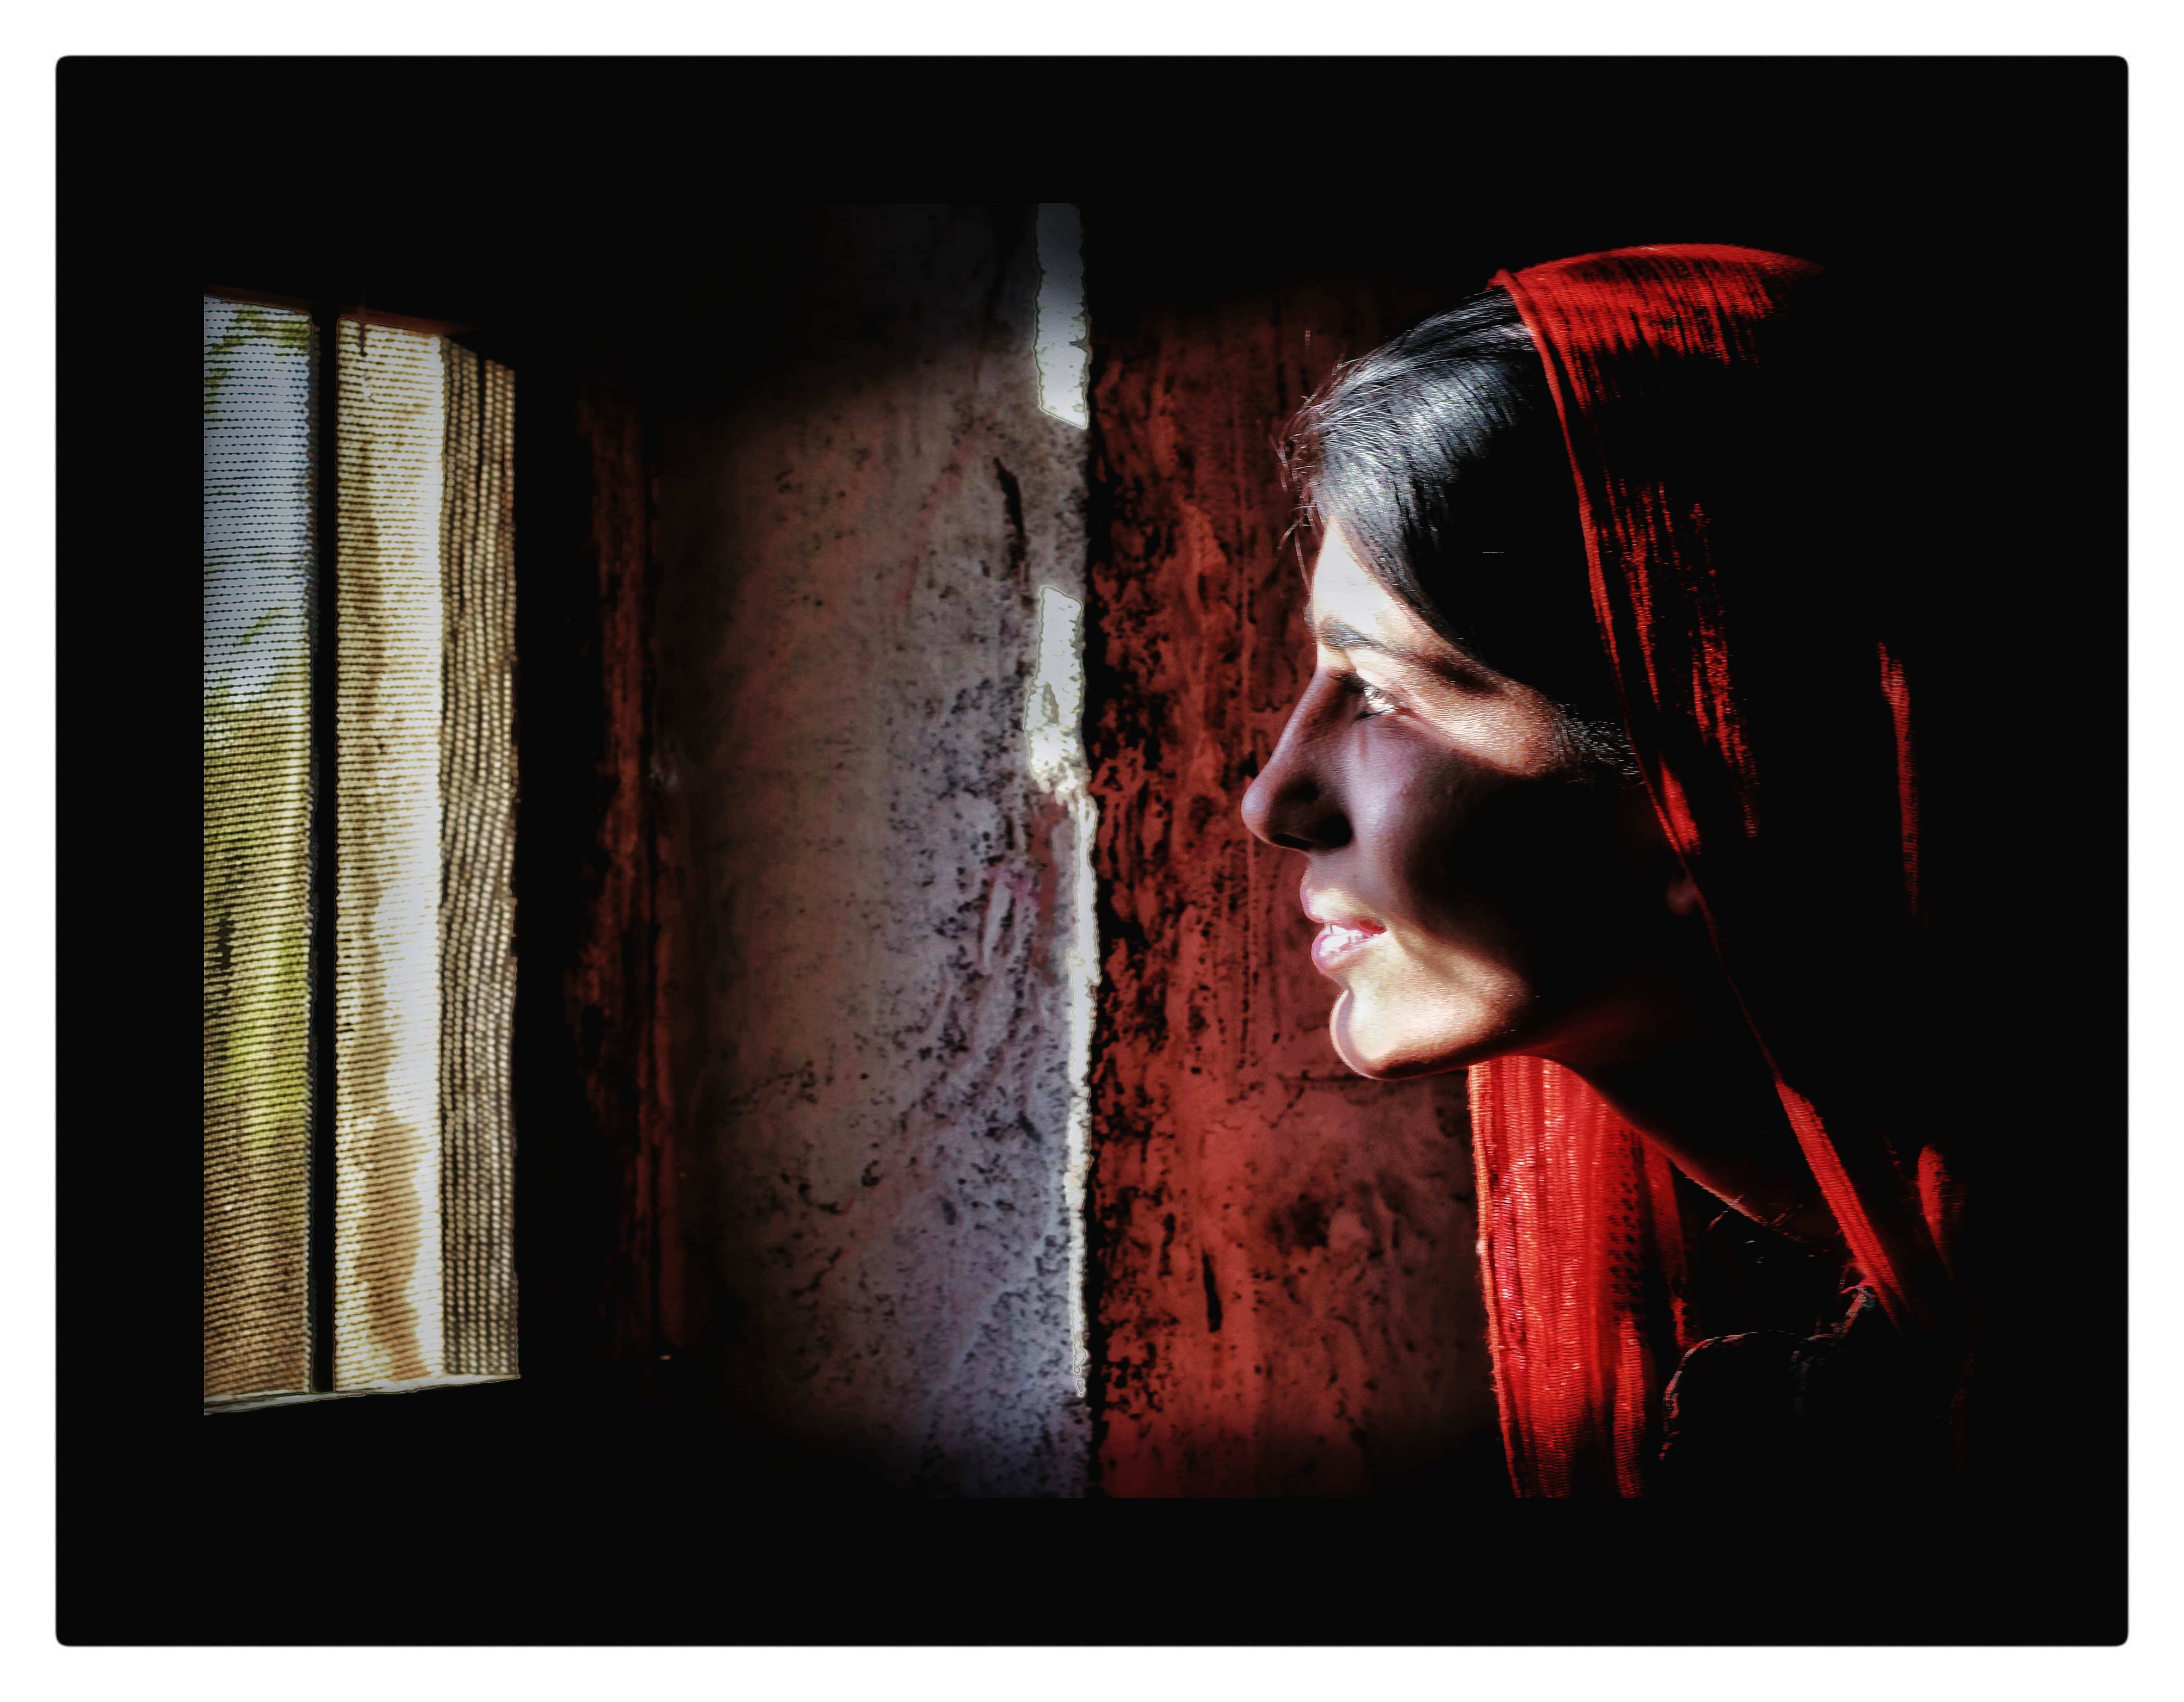  Unlocked_Vijay Singh_Window of Hope_12 x 18 inches_Photographic print_2020